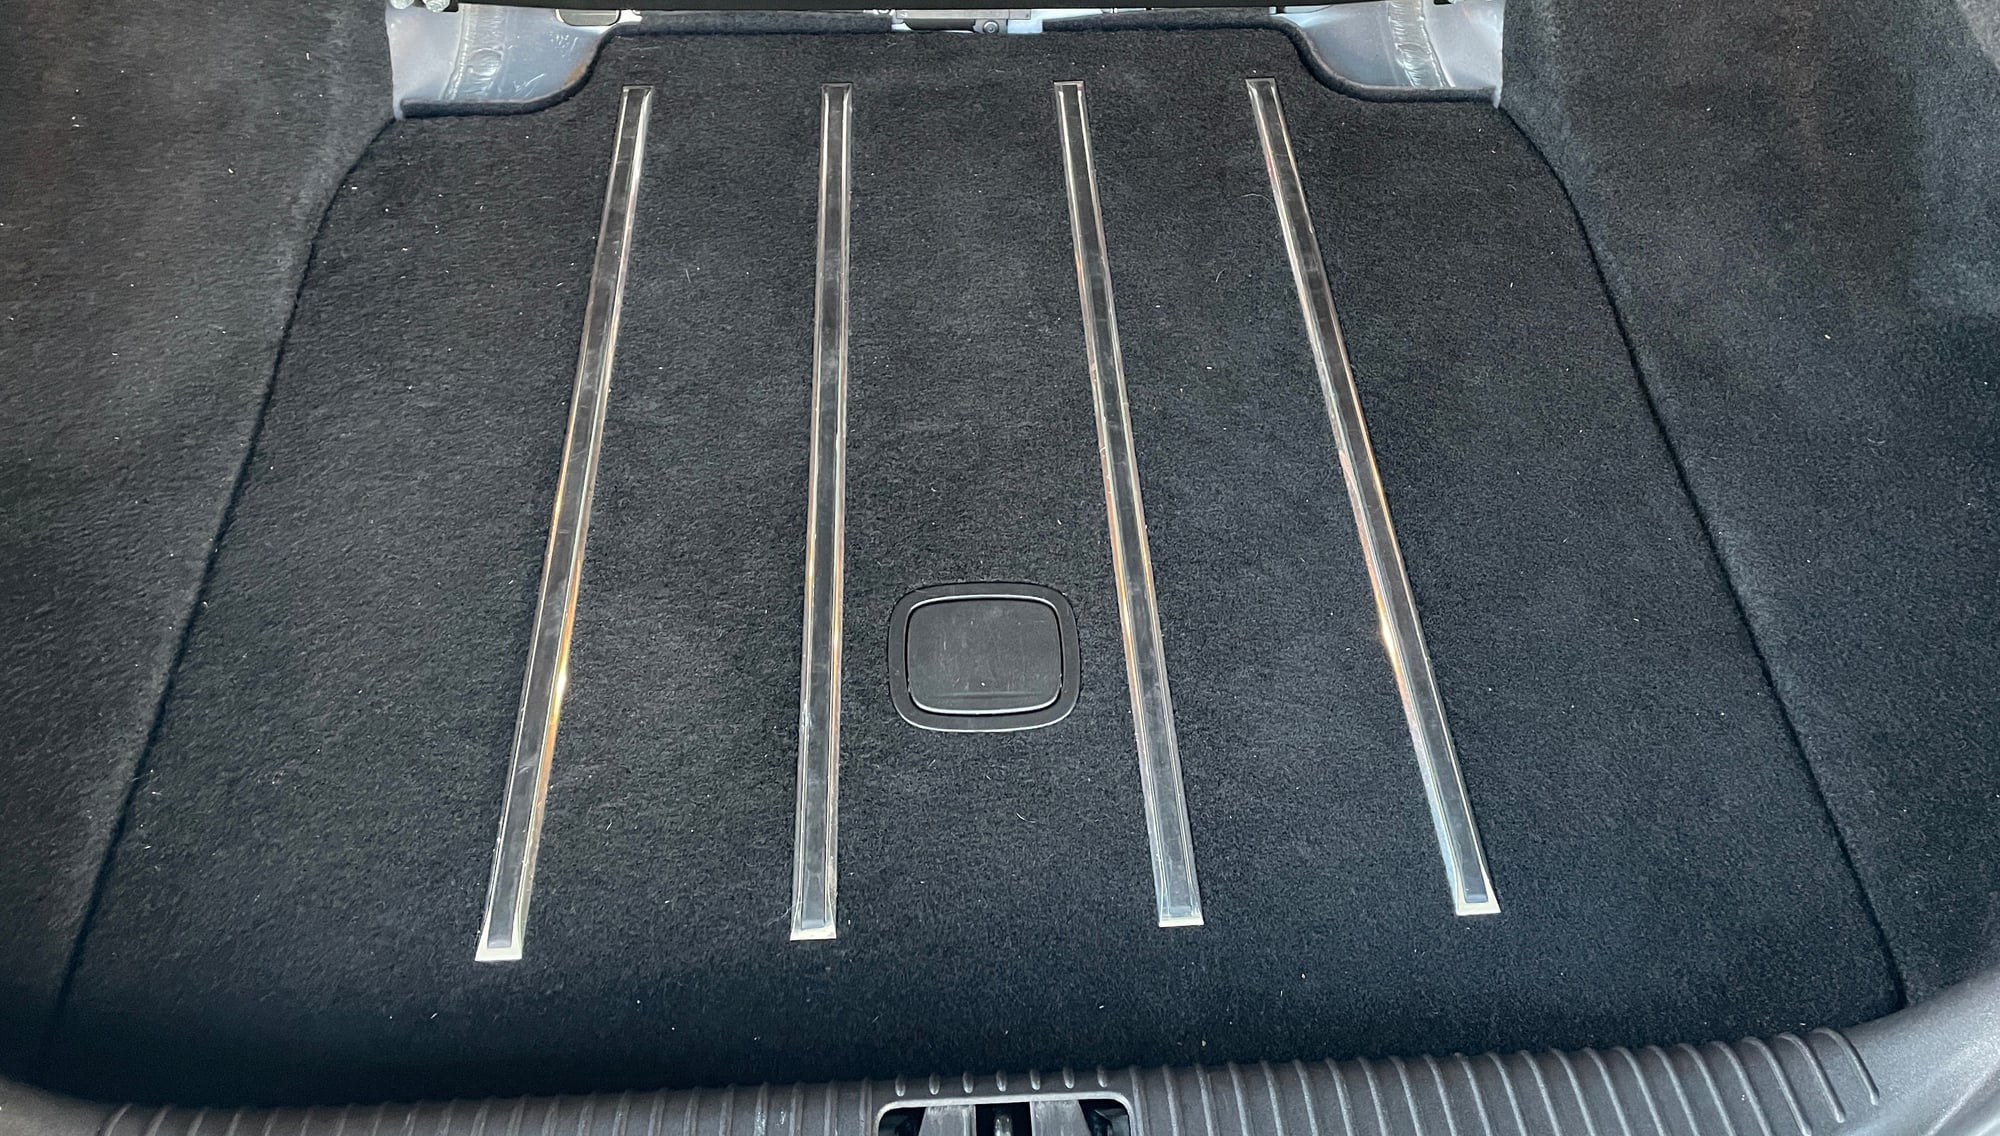 Interior/Upholstery - Jaguar X150 trunk boot carpet panel C2P13113 - Used - 2007 to 2015 Jaguar XKR - 2007 to 2015 Jaguar XK - Tampa, FL 33607, United States